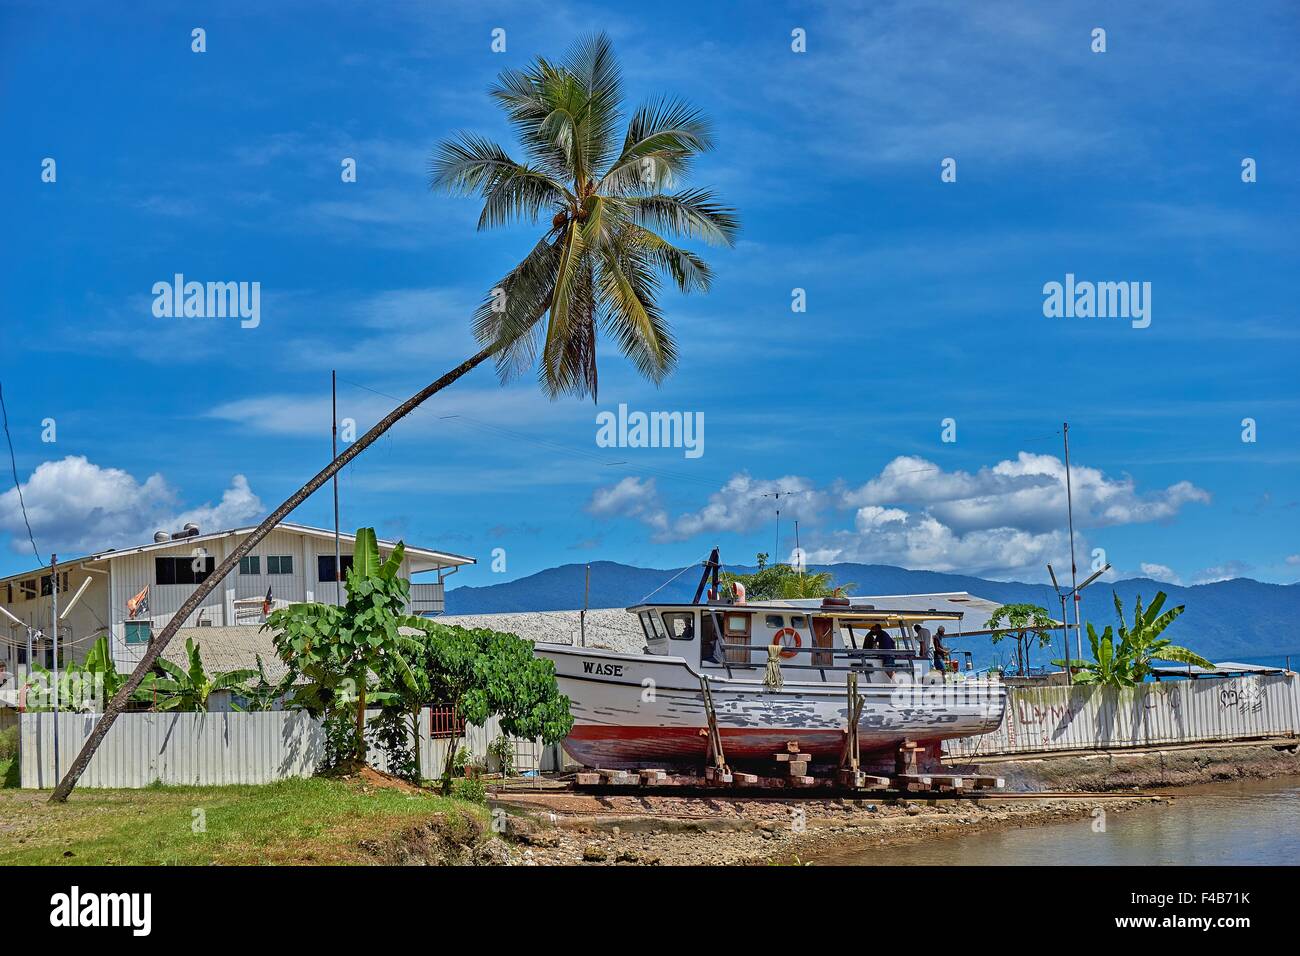 Alotau PNG Papua New Guinea Harbor Fishing Boat Dry Dock Slip Stock Photo